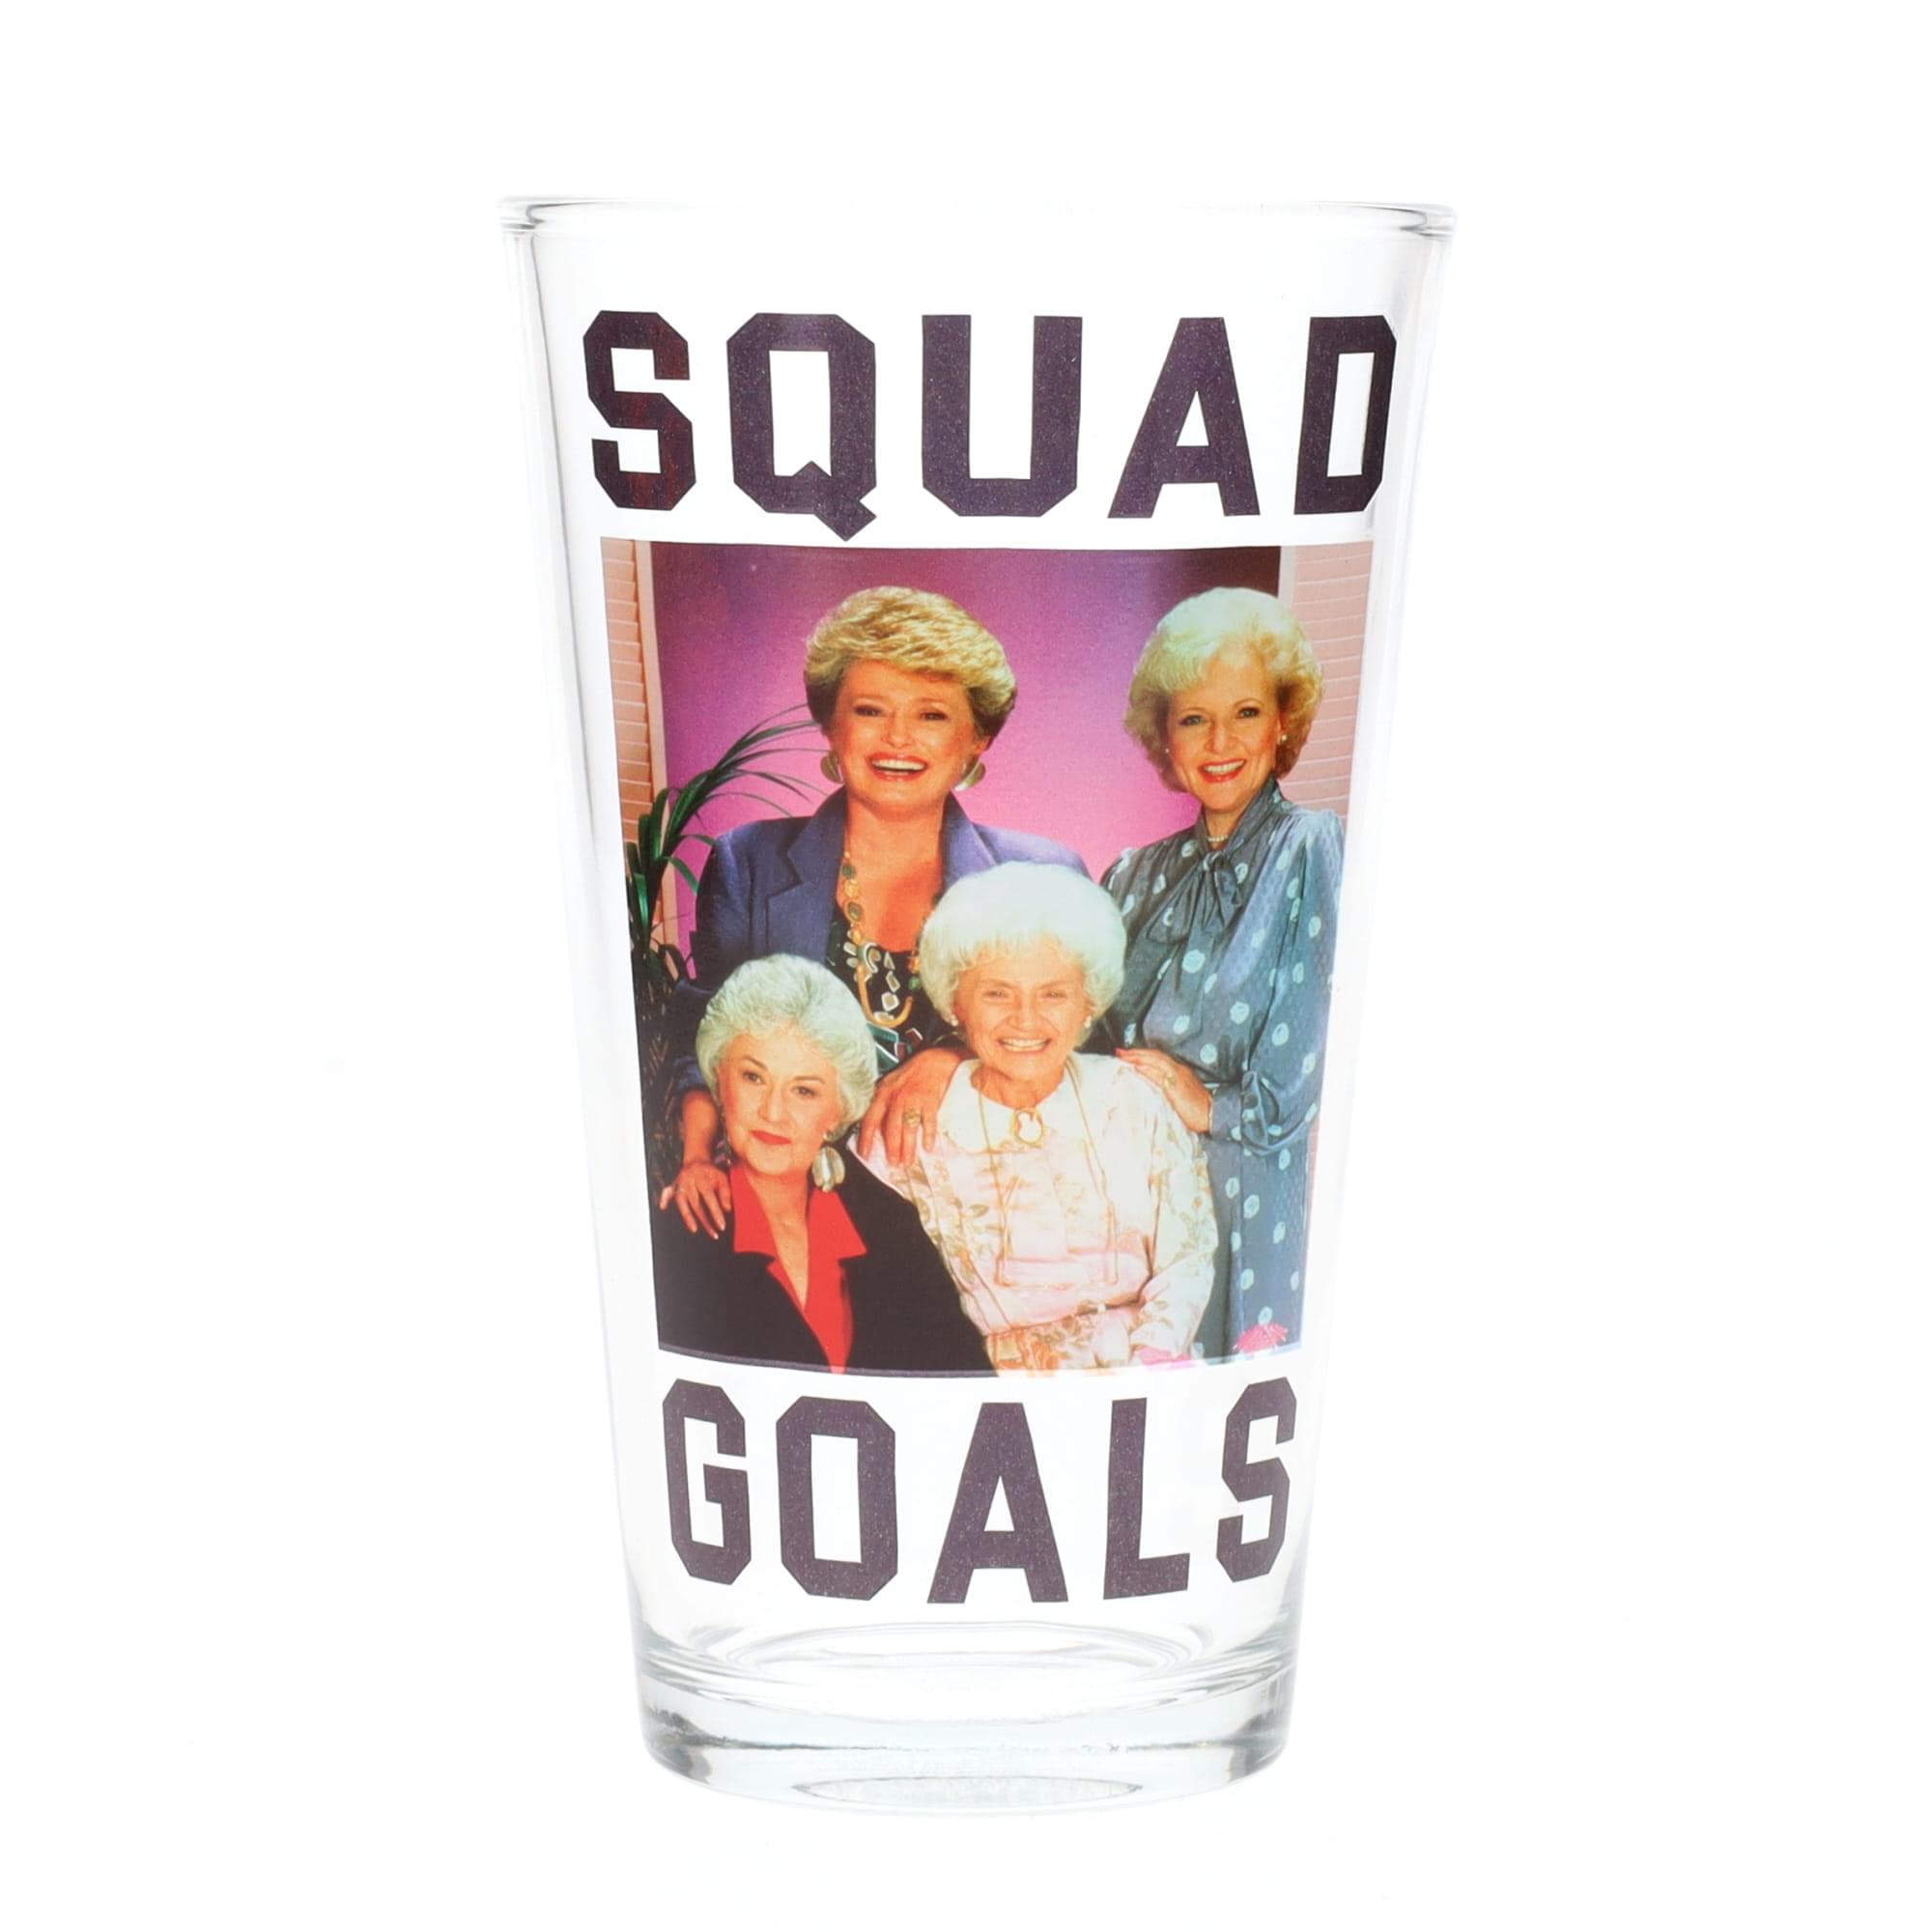 The Golden Girls Squad Goals Pint Glass , Holds 15 Ounces